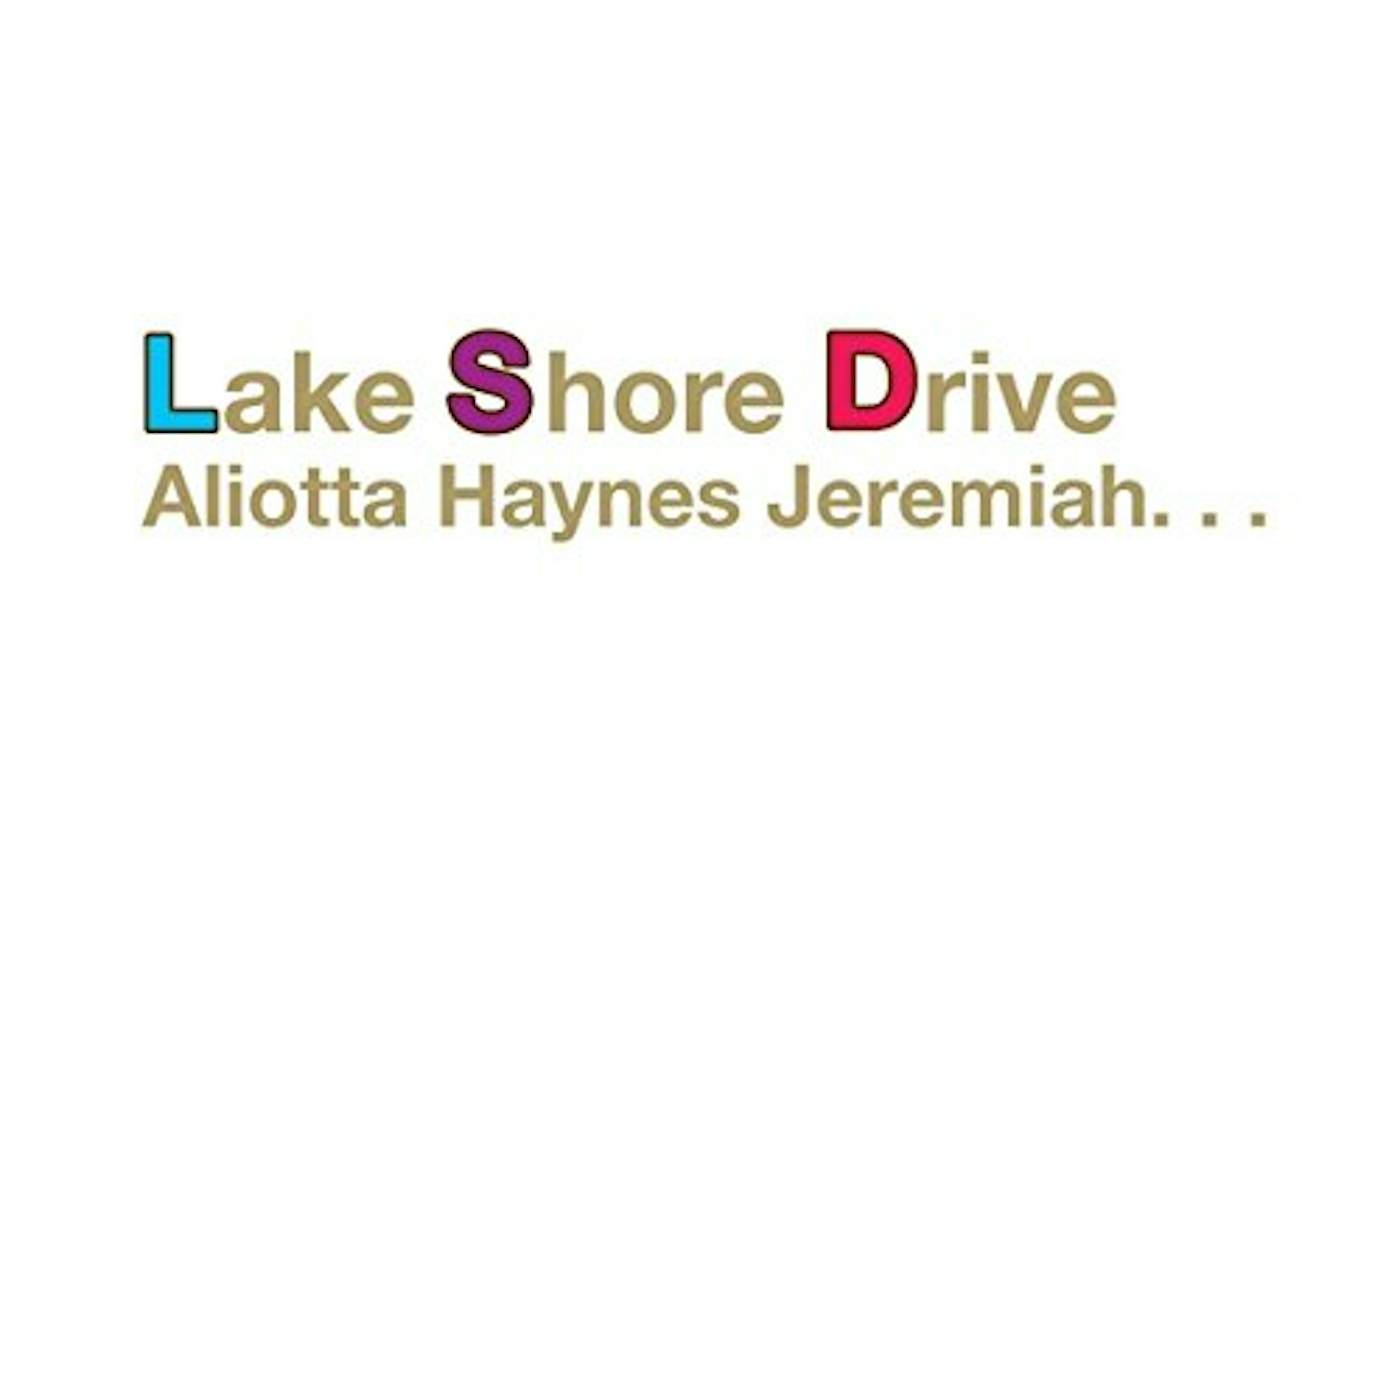 Aliotta Haynes Jeremiah LAKE SHORE DRIVE CD